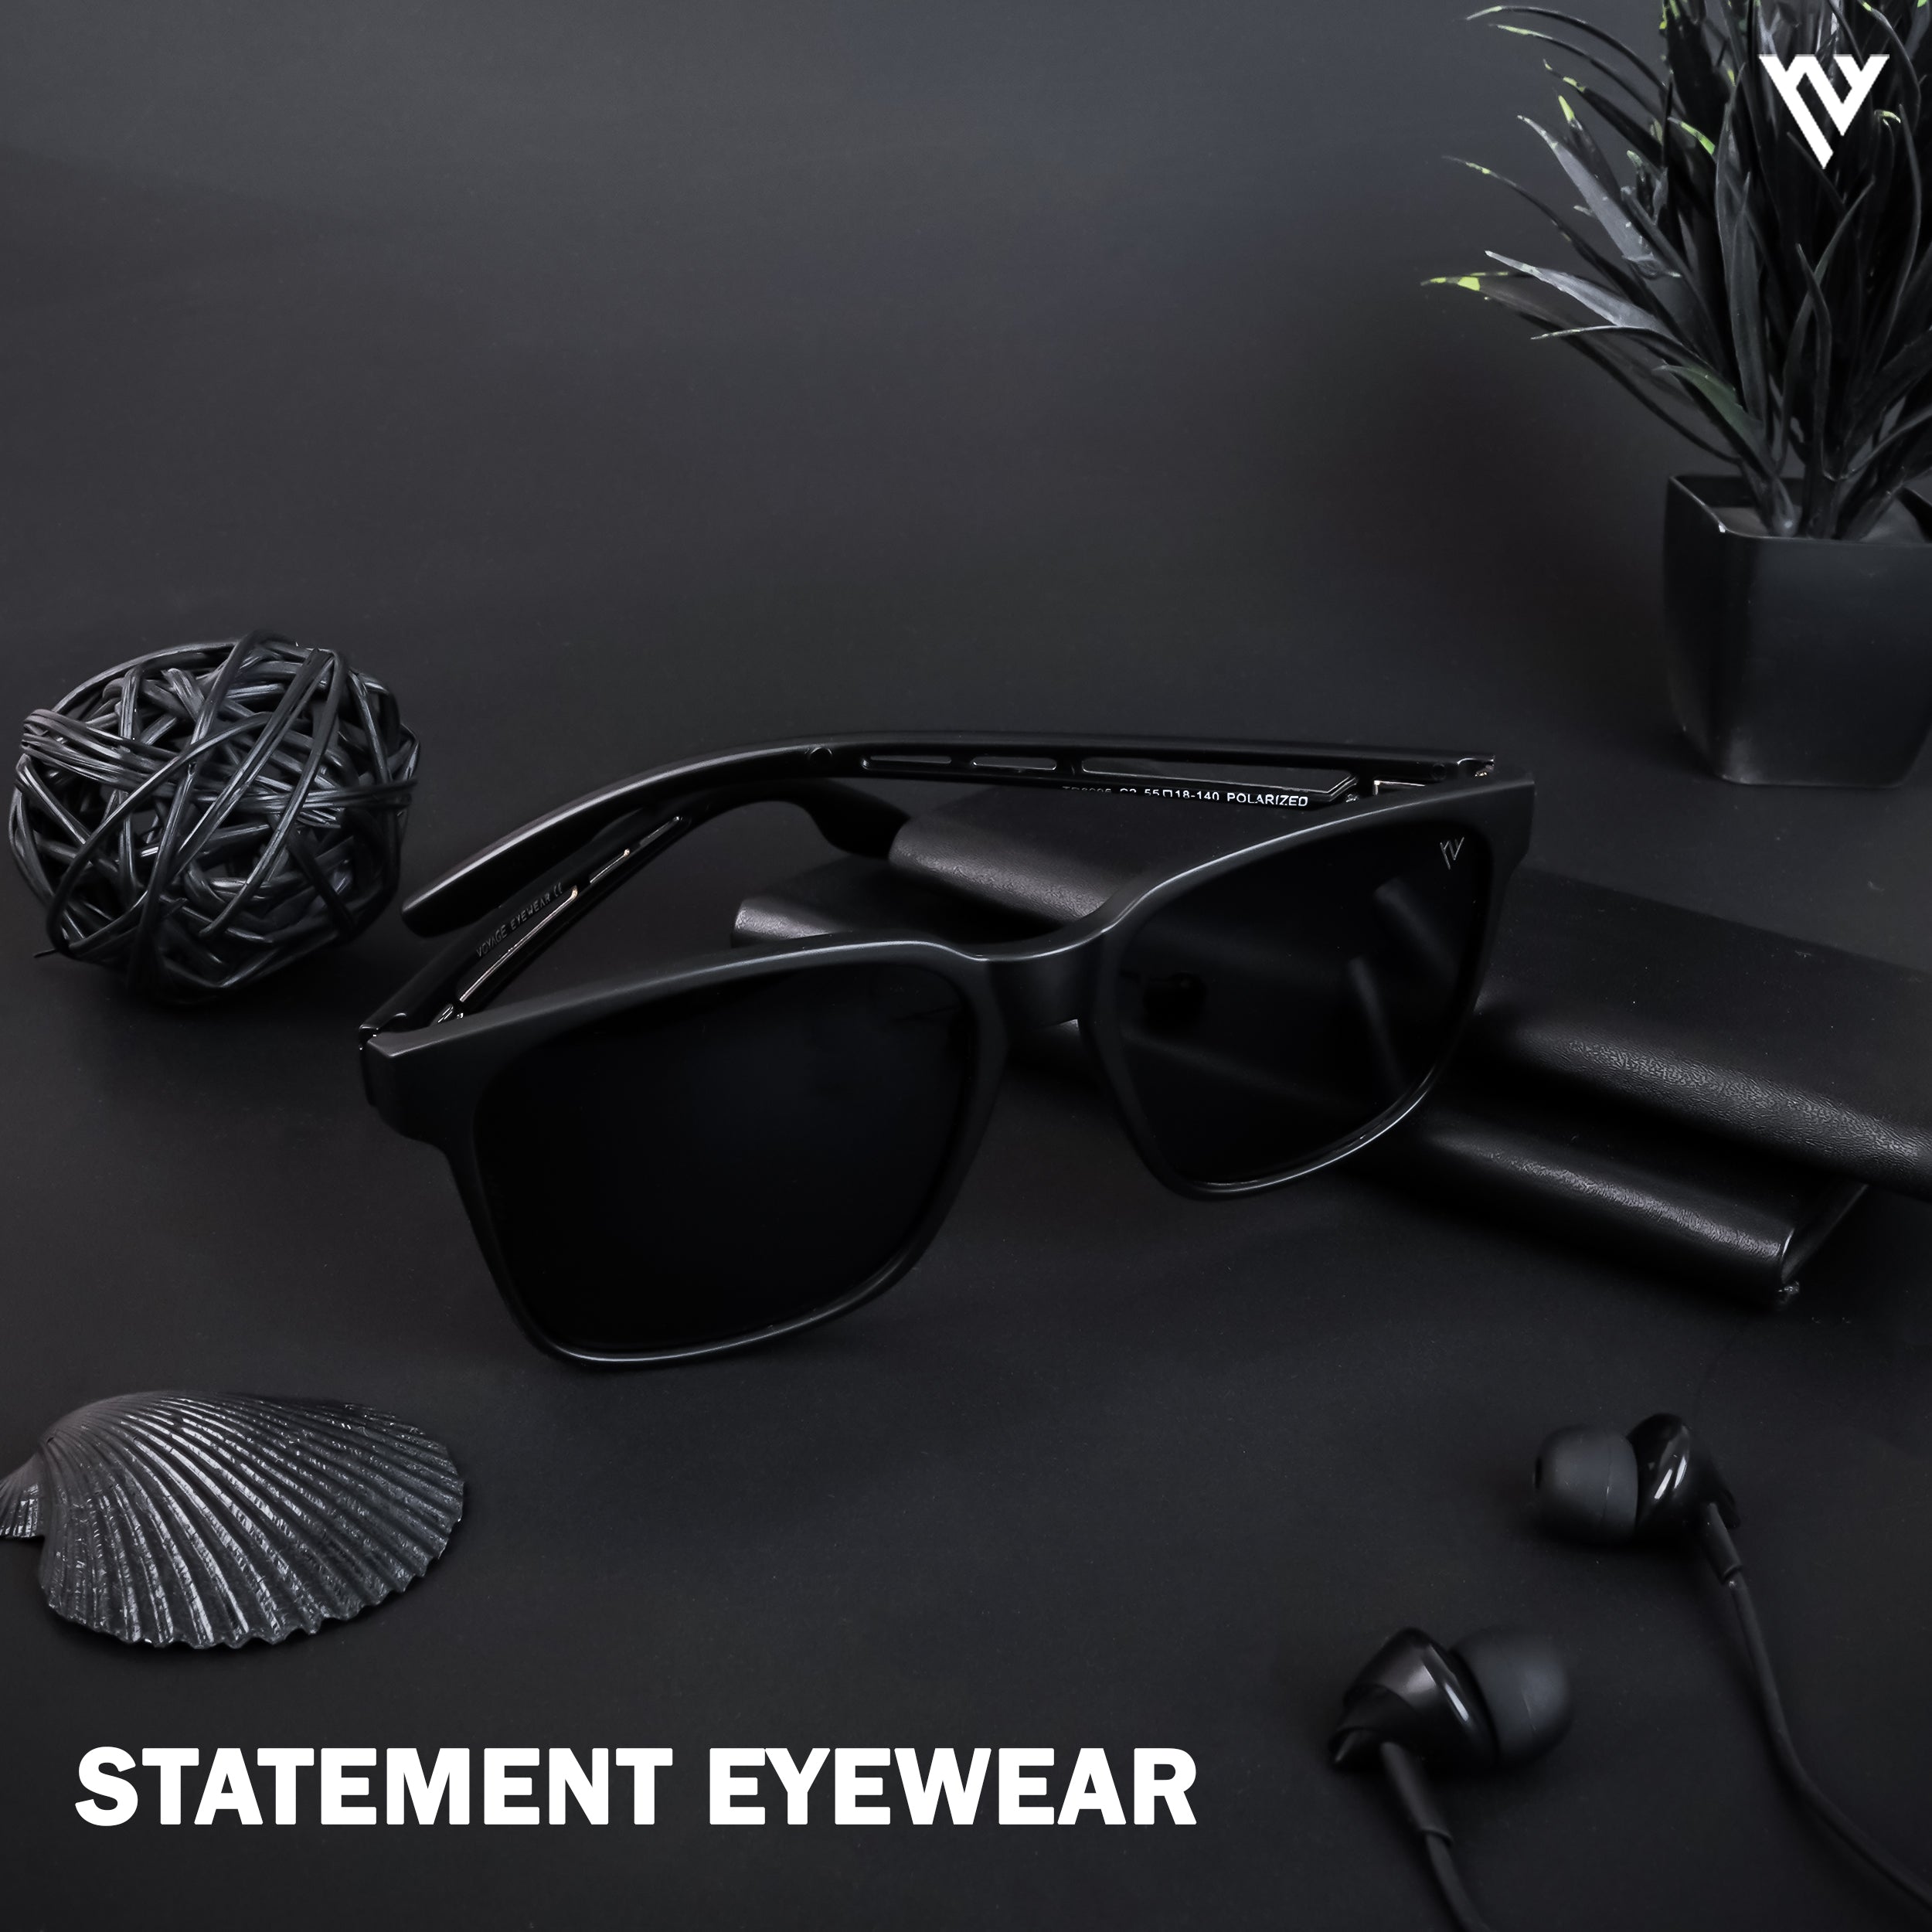 Voyage Exclusive Matt Black Polarized Wayfarer Sunglasses for Men & Women - PMG4489